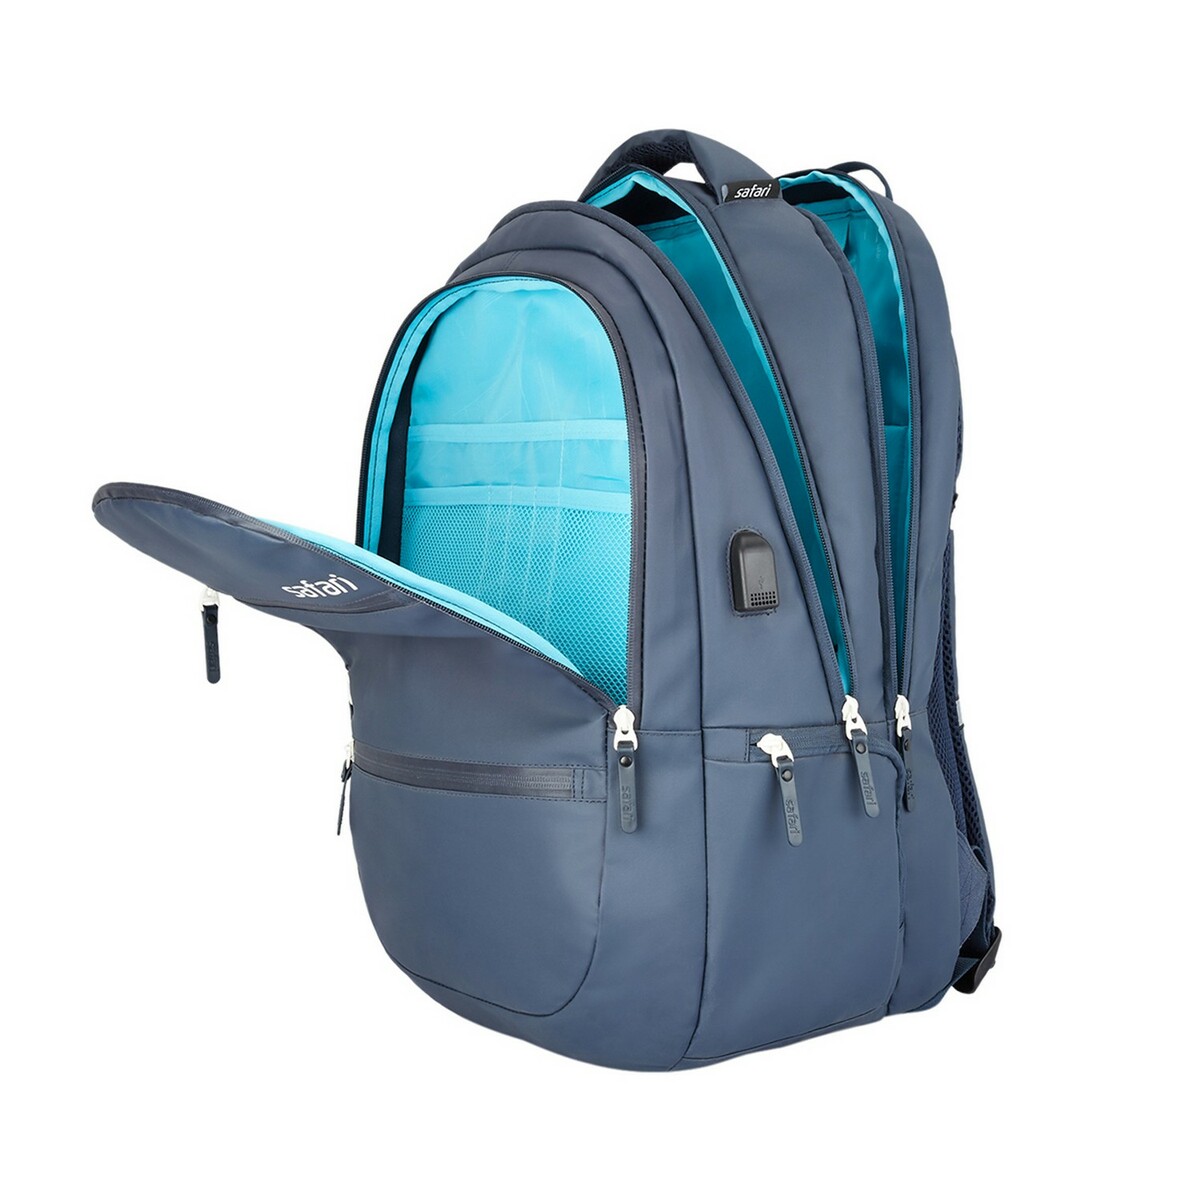 Safari Backpack Hacker 01 With USB 19inch Blue